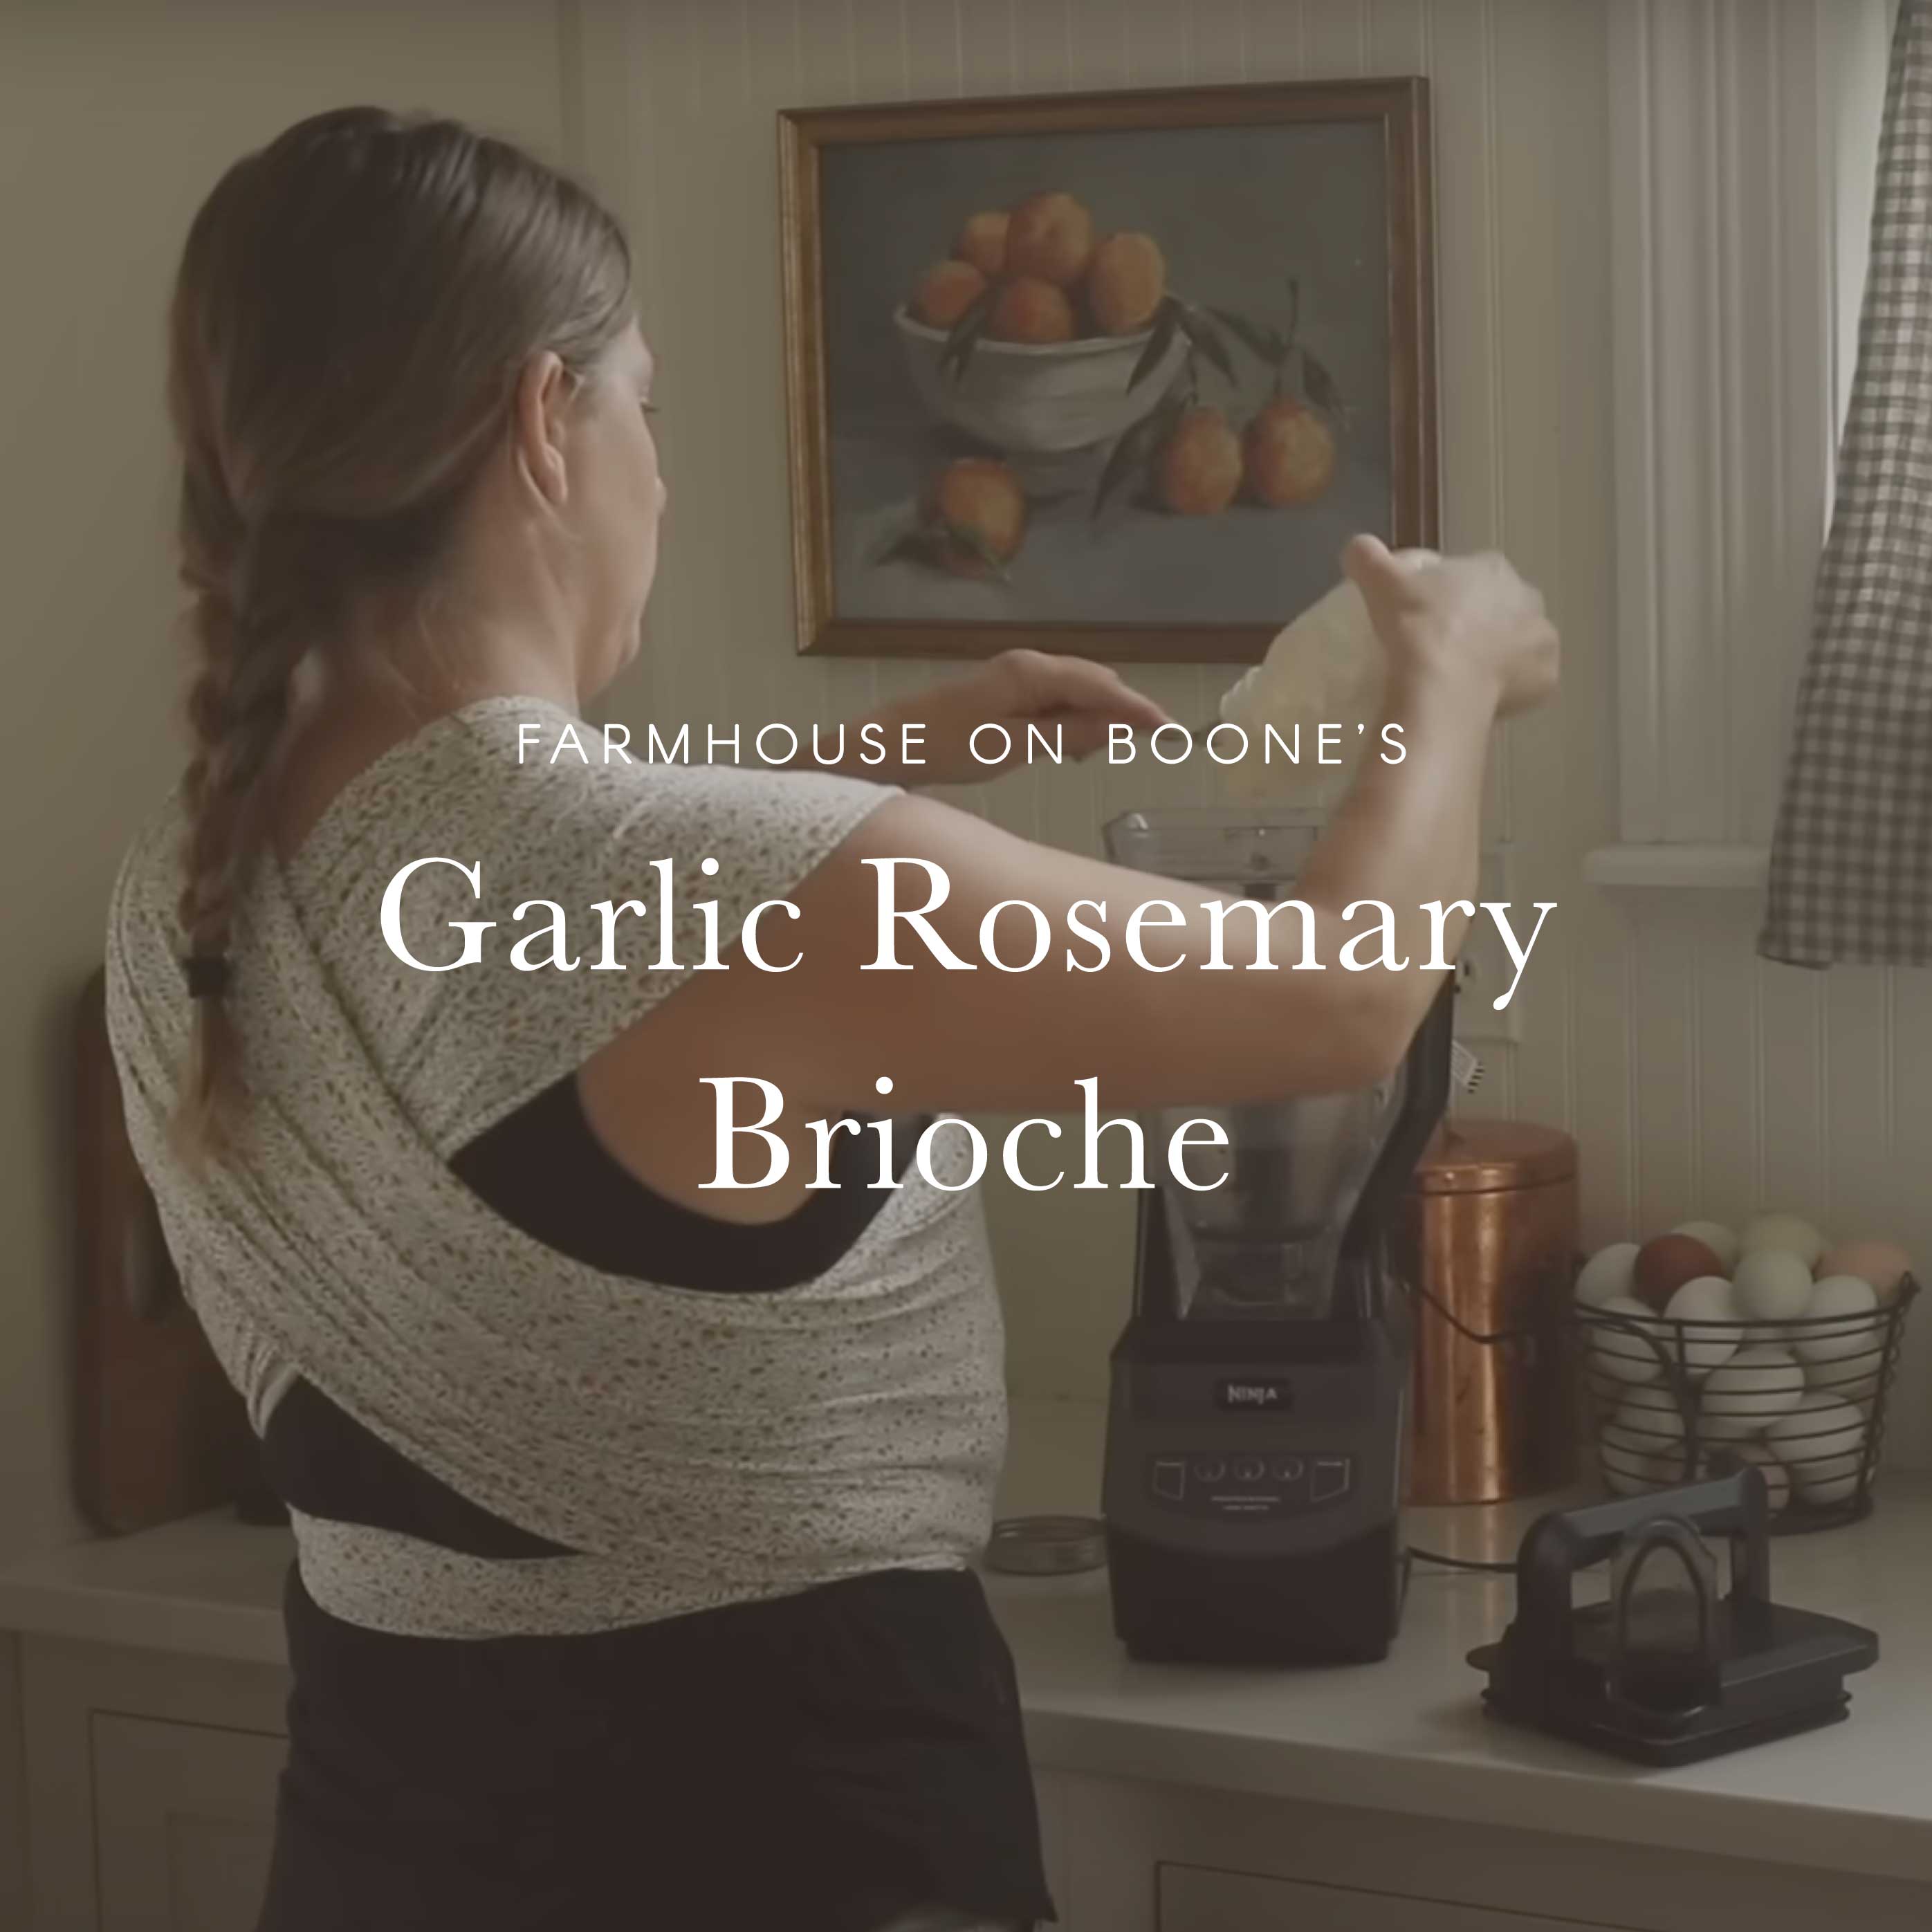 Farmhouse on Boone's Garlic Rosemary Brioche